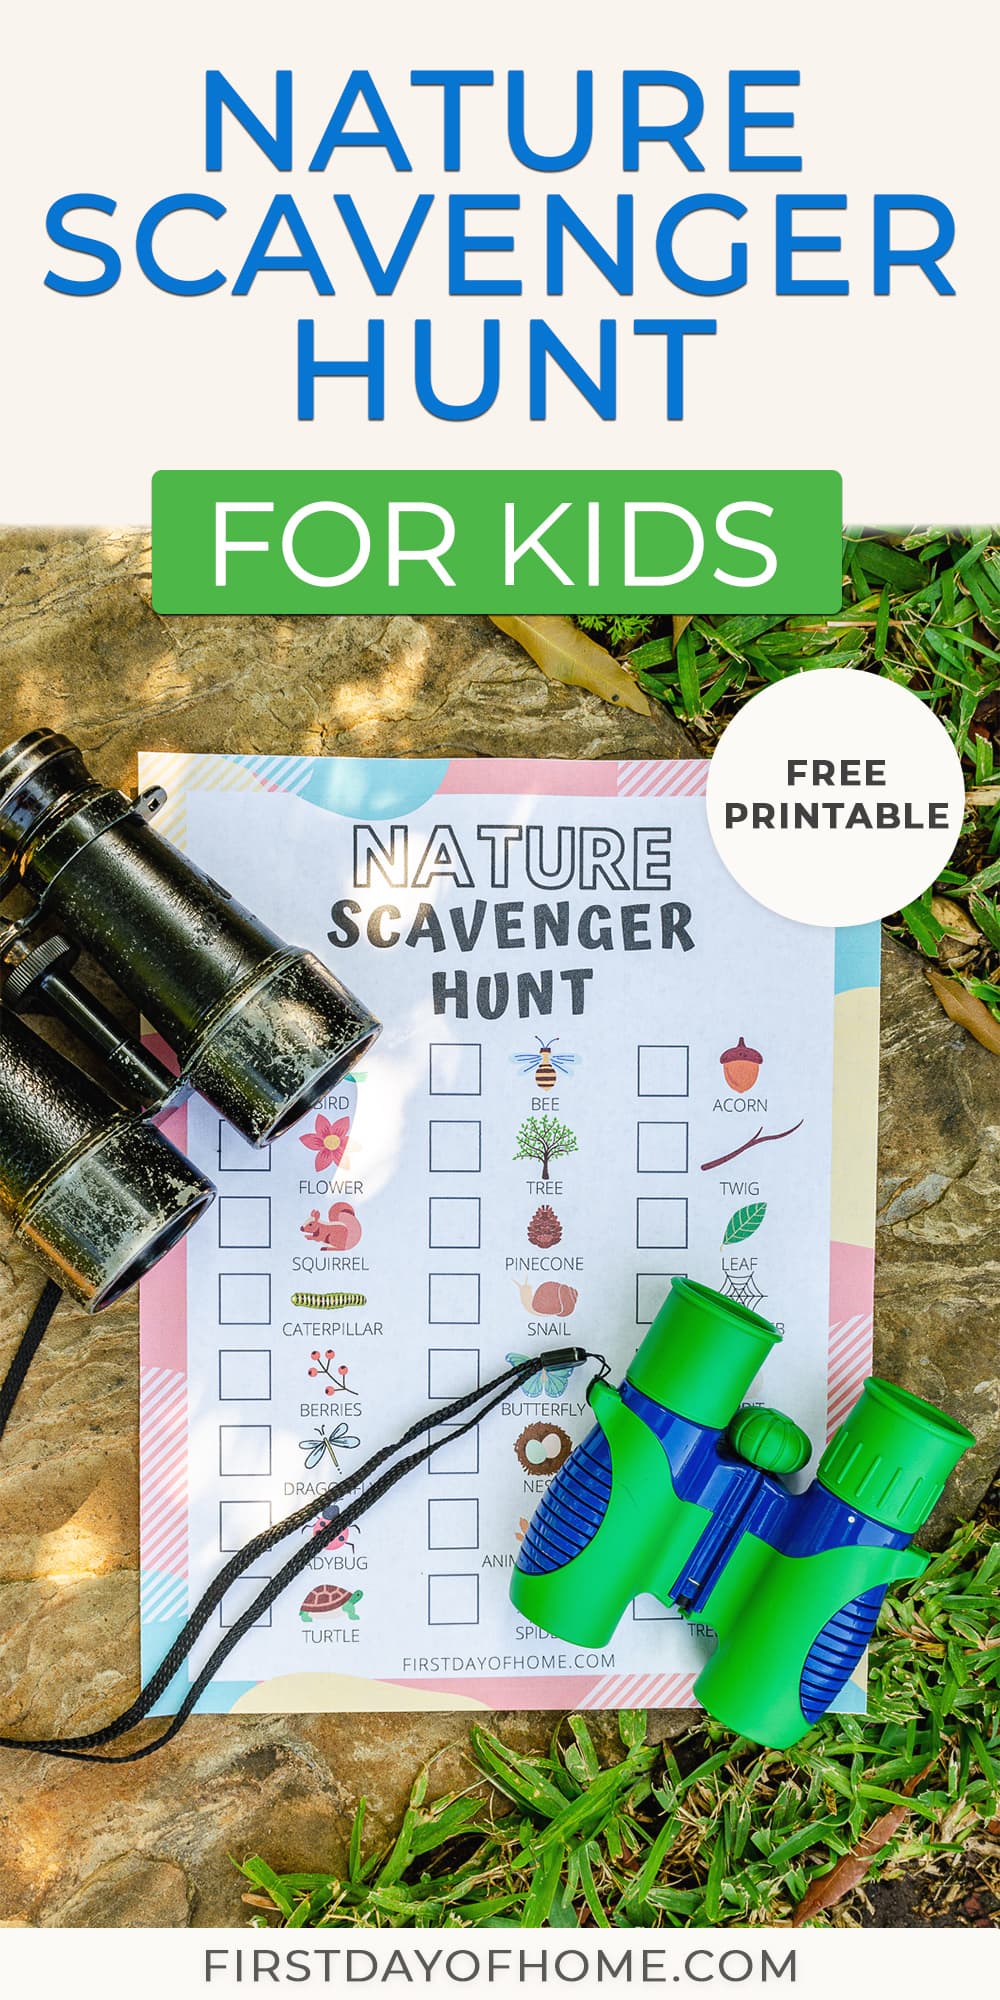 Nature scavenger hunt for kids free printable